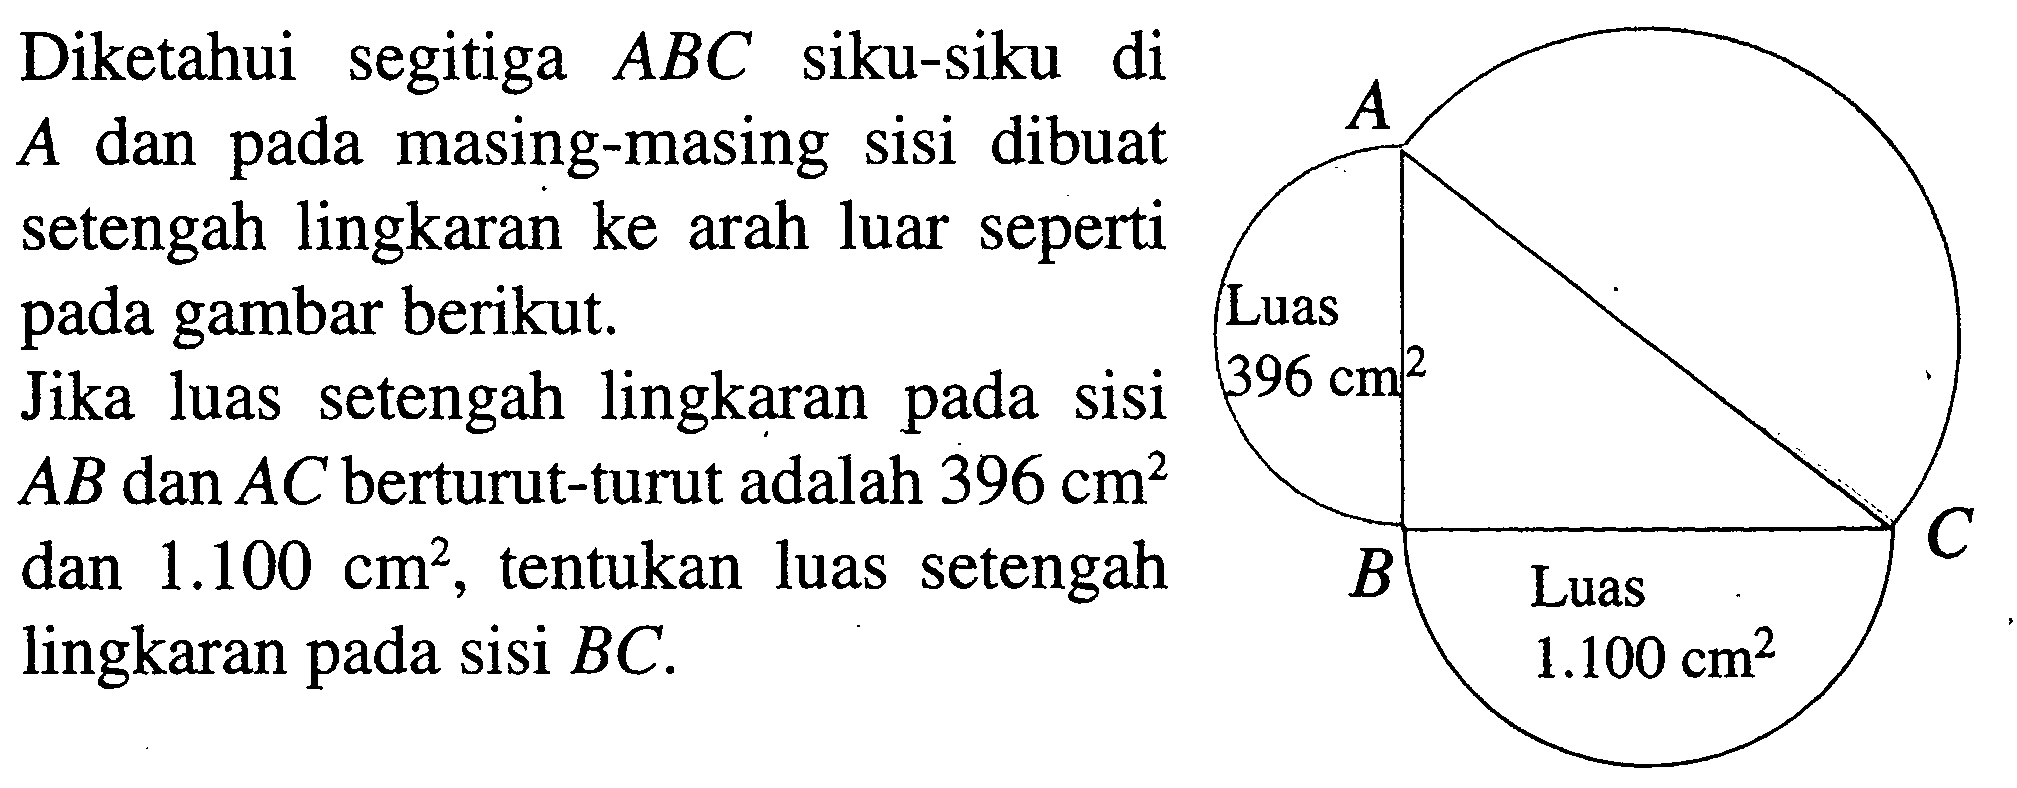 Diketahui segitiga  ABC siku-siku di A dan pada masing-masing sisi dibuat setengah lingkaran ke arah luar seperti pada gambar berikut. Luas=396 cm^2, Luas=1100 cm^2 